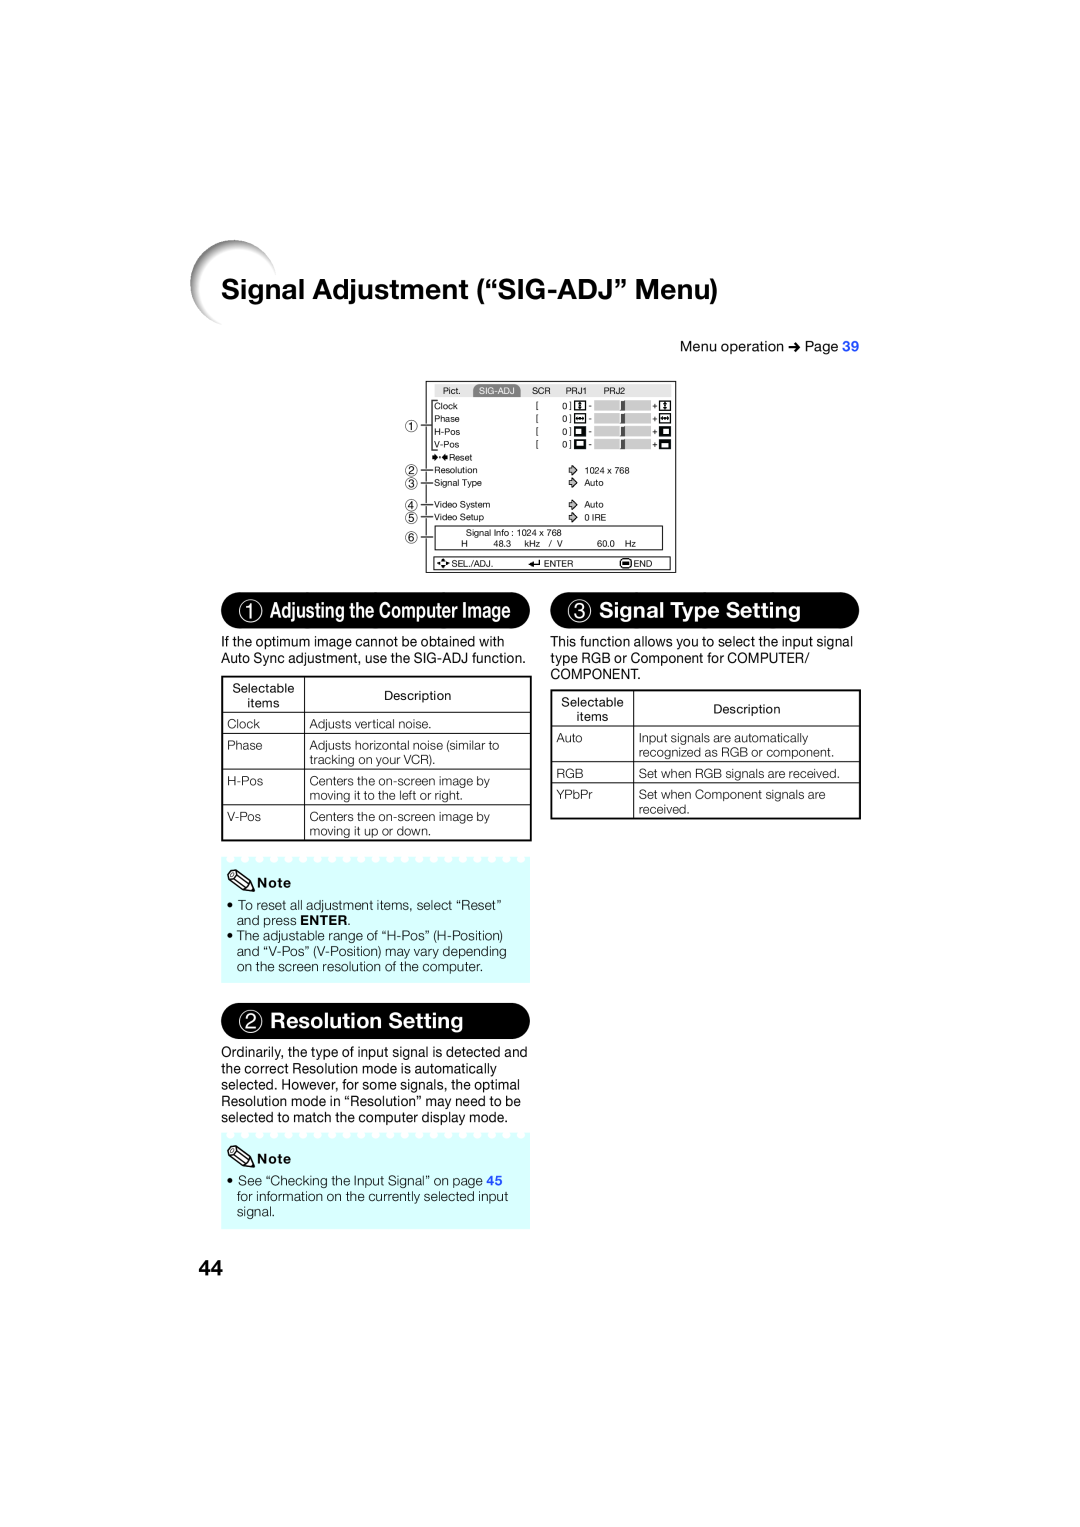 Sharp XR-55X Signal Adjustment “SIG-ADJ” Menu, Signal Type Setting, Resolution Setting, Adjusting the Computer Image 